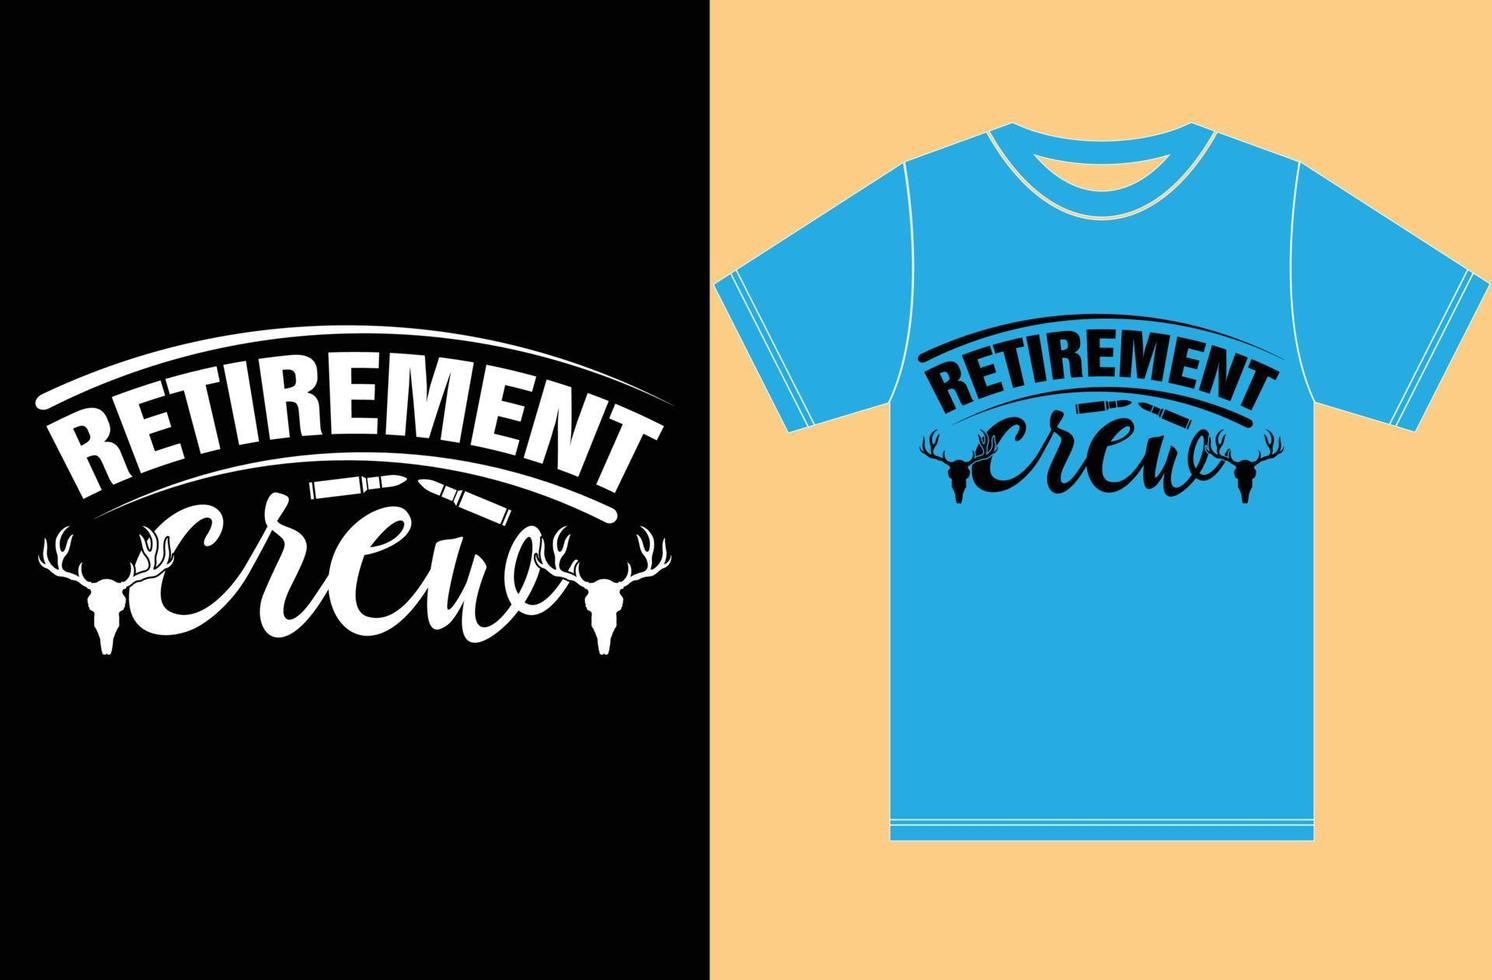 t-shirt design.retirement crew t-shirt da caccia. vettore